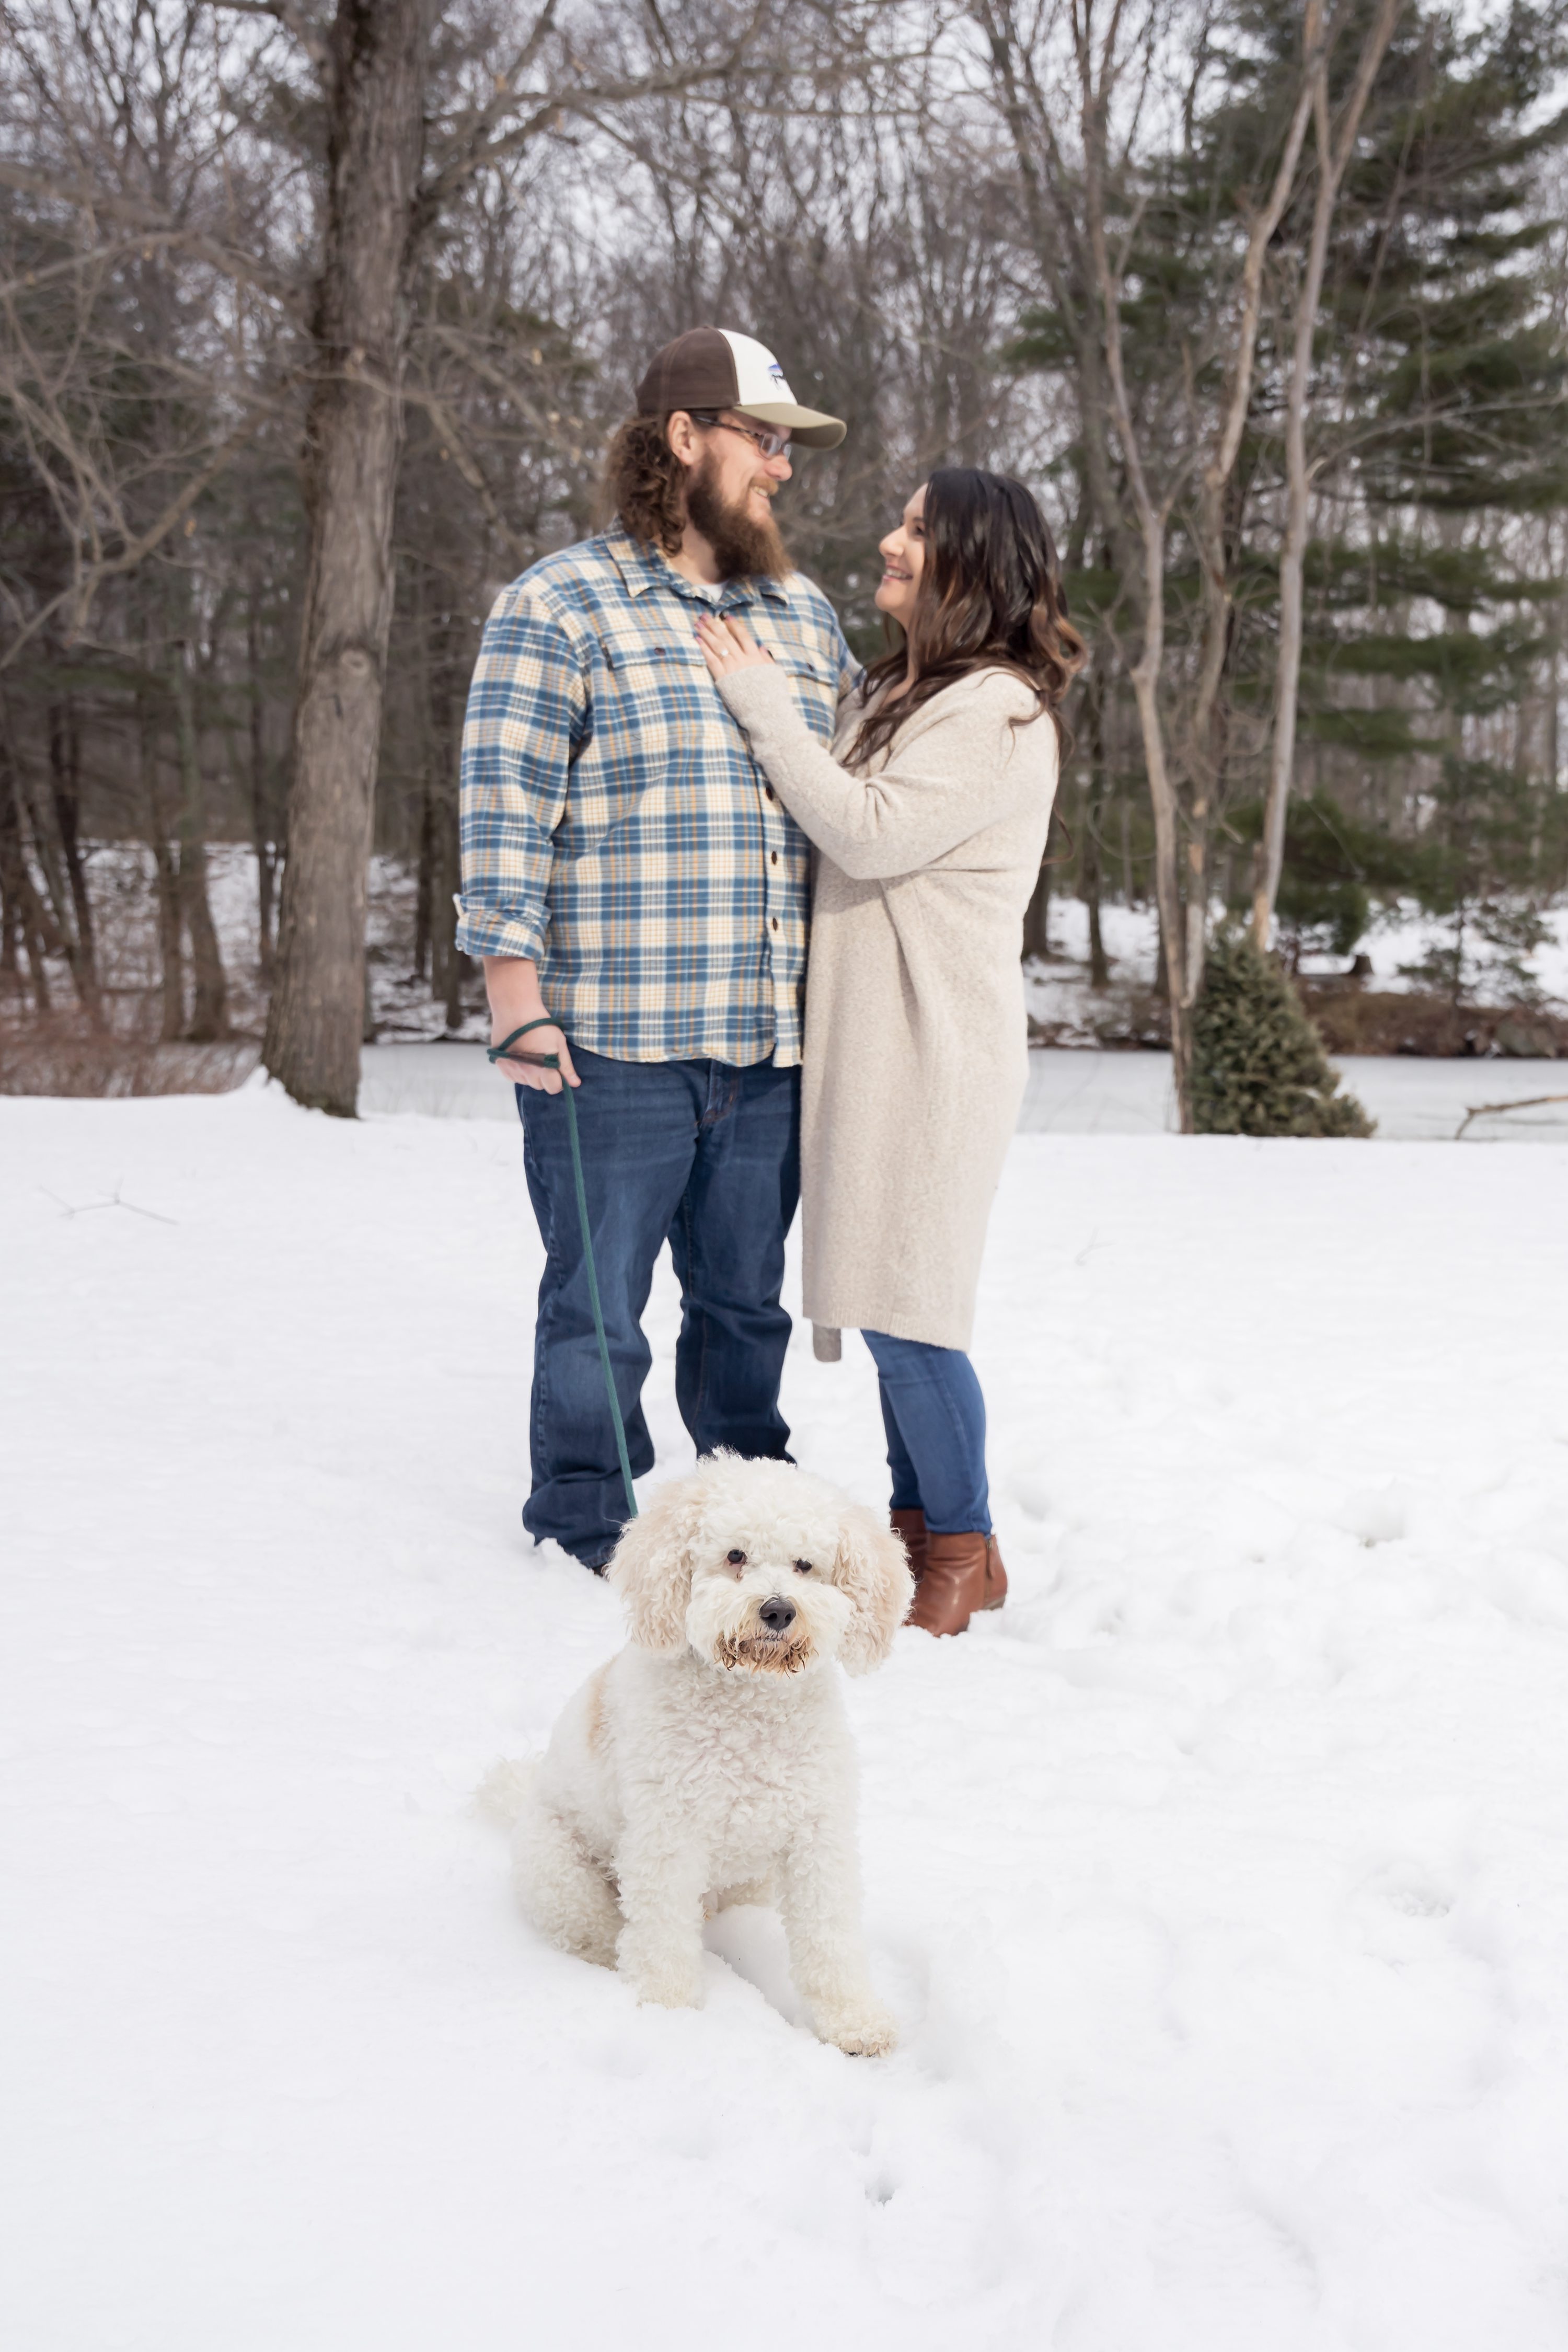 Southcoast Wedding Photographer,Cape Cod Wedding Photographer,Engagement Session with dog,Incorporating Dogs at Engagement Session,Massachusetts Engagement Photographer